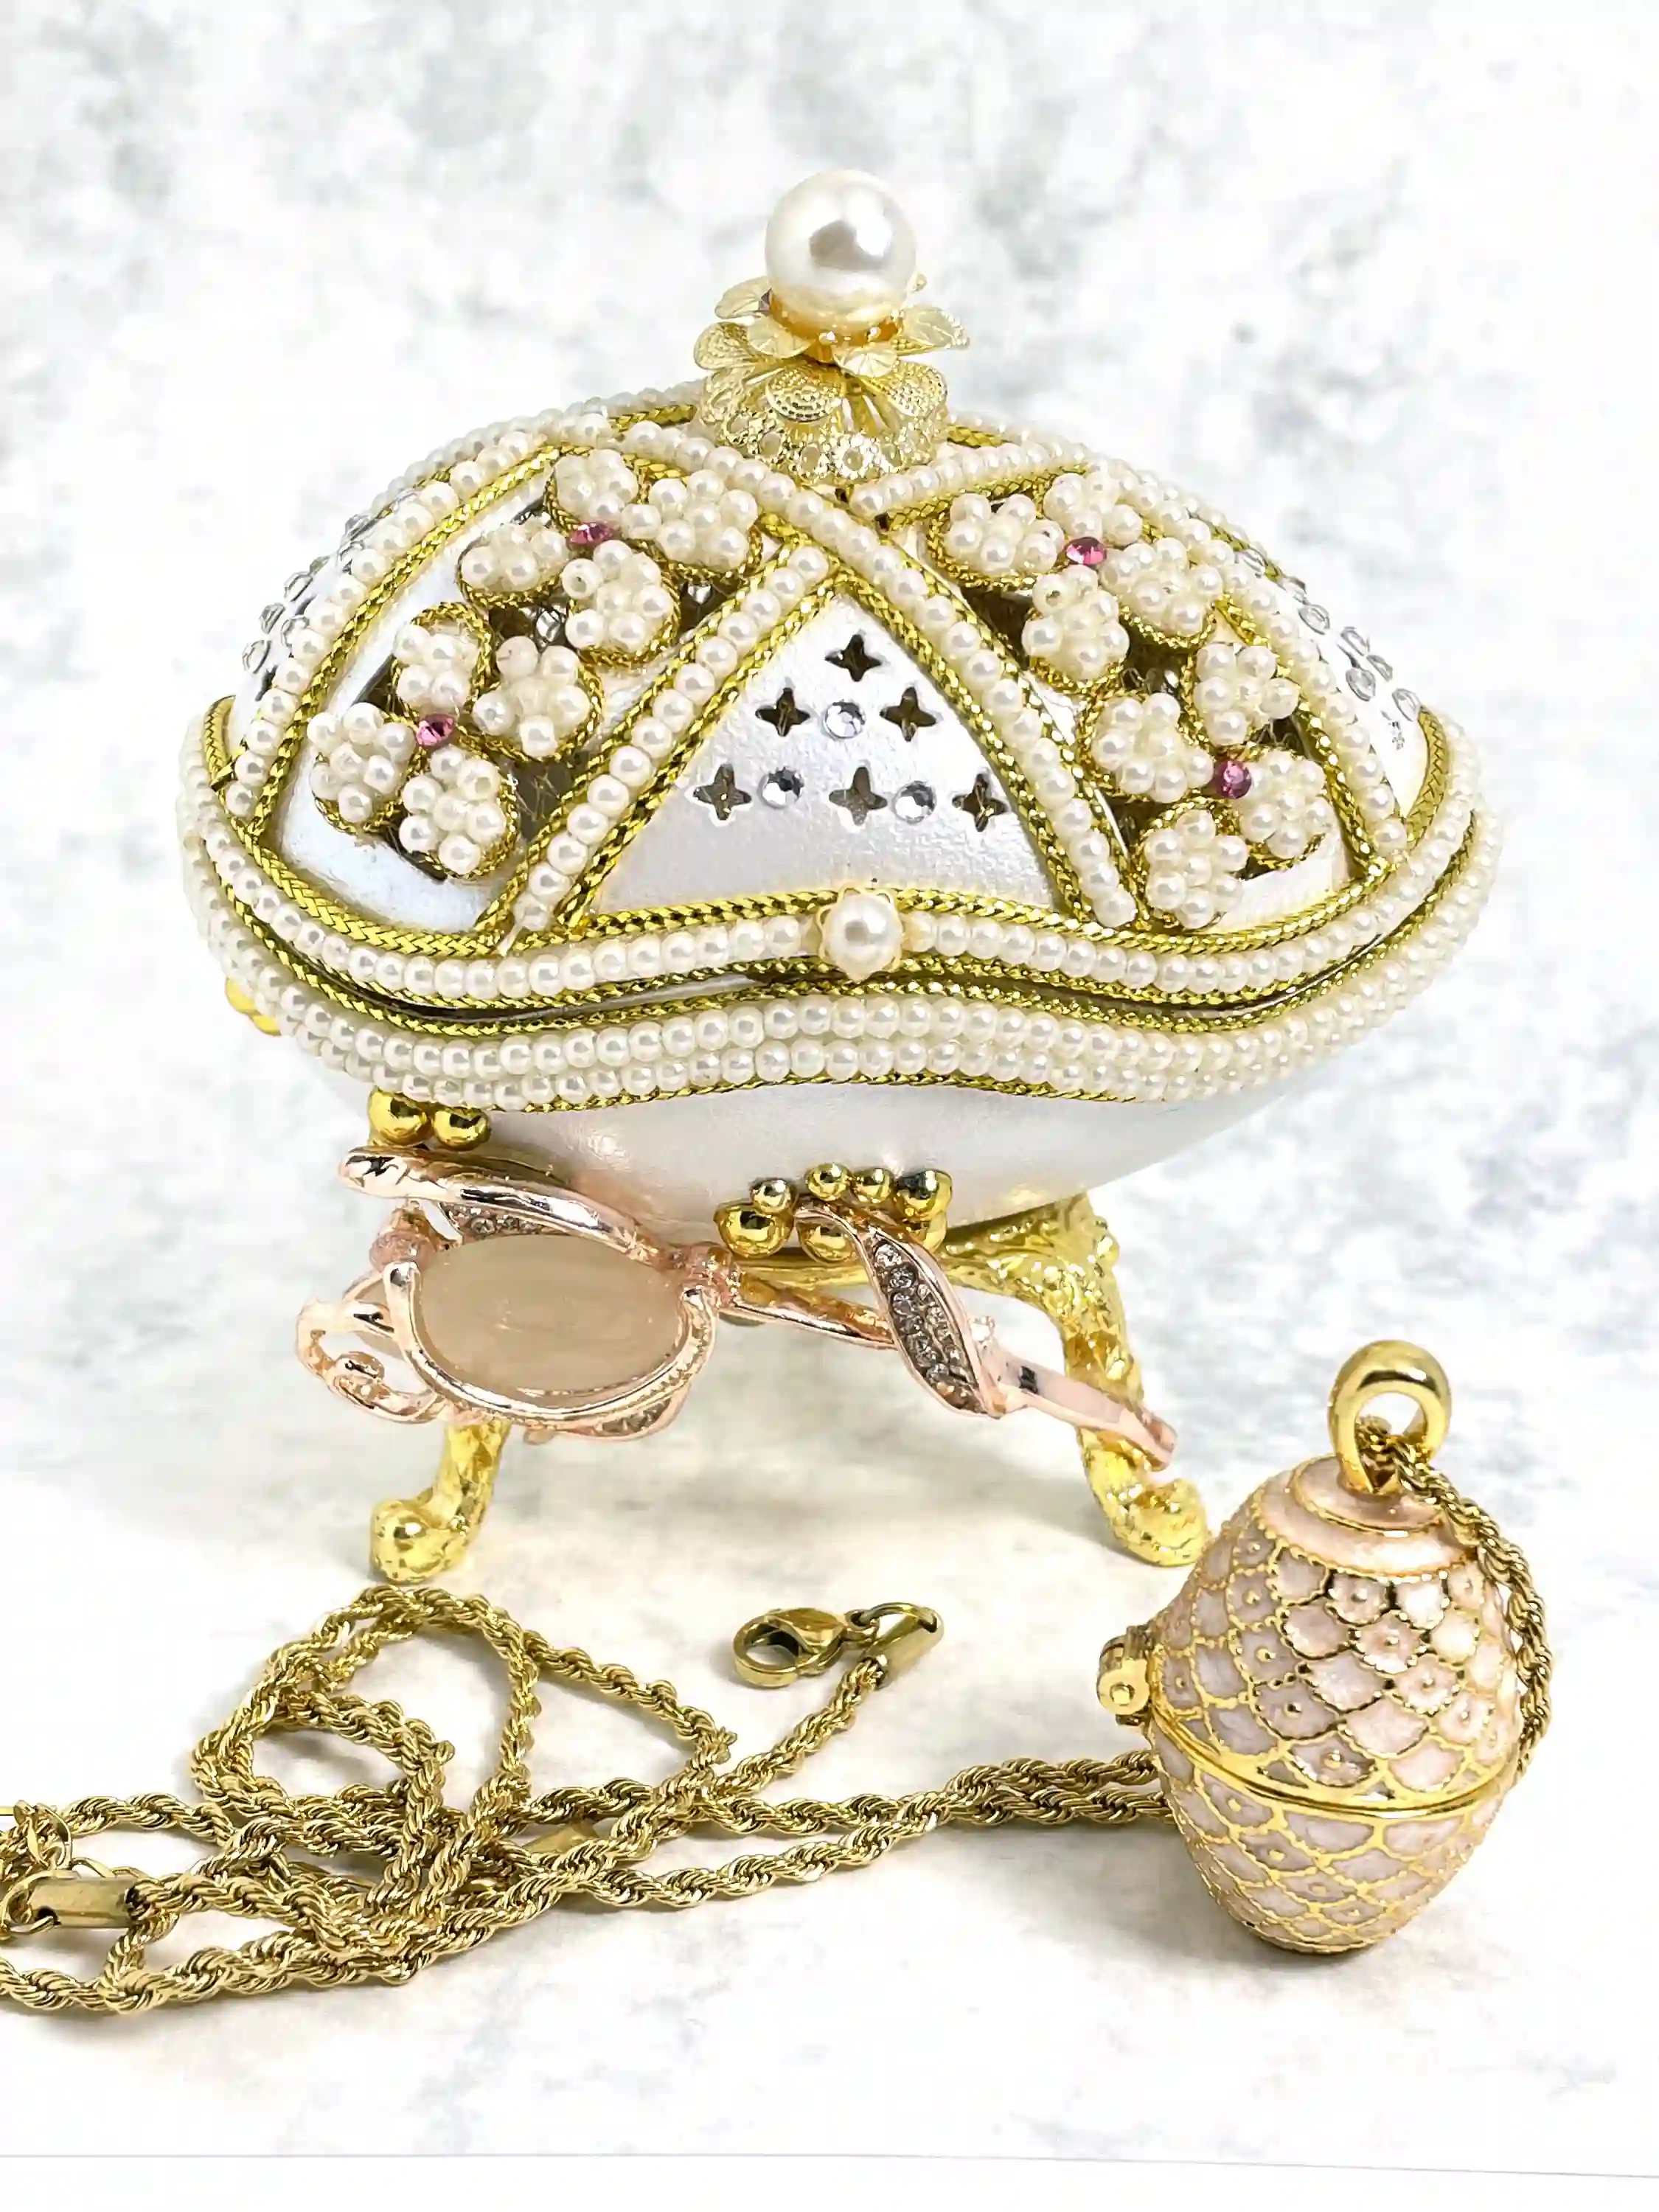 Limited Edition - Faberge egg Music box + Pink Faberge egg Pendant Necklace + Bracelet - 24k Gold - Birthday gifts - Faberge egg style - 